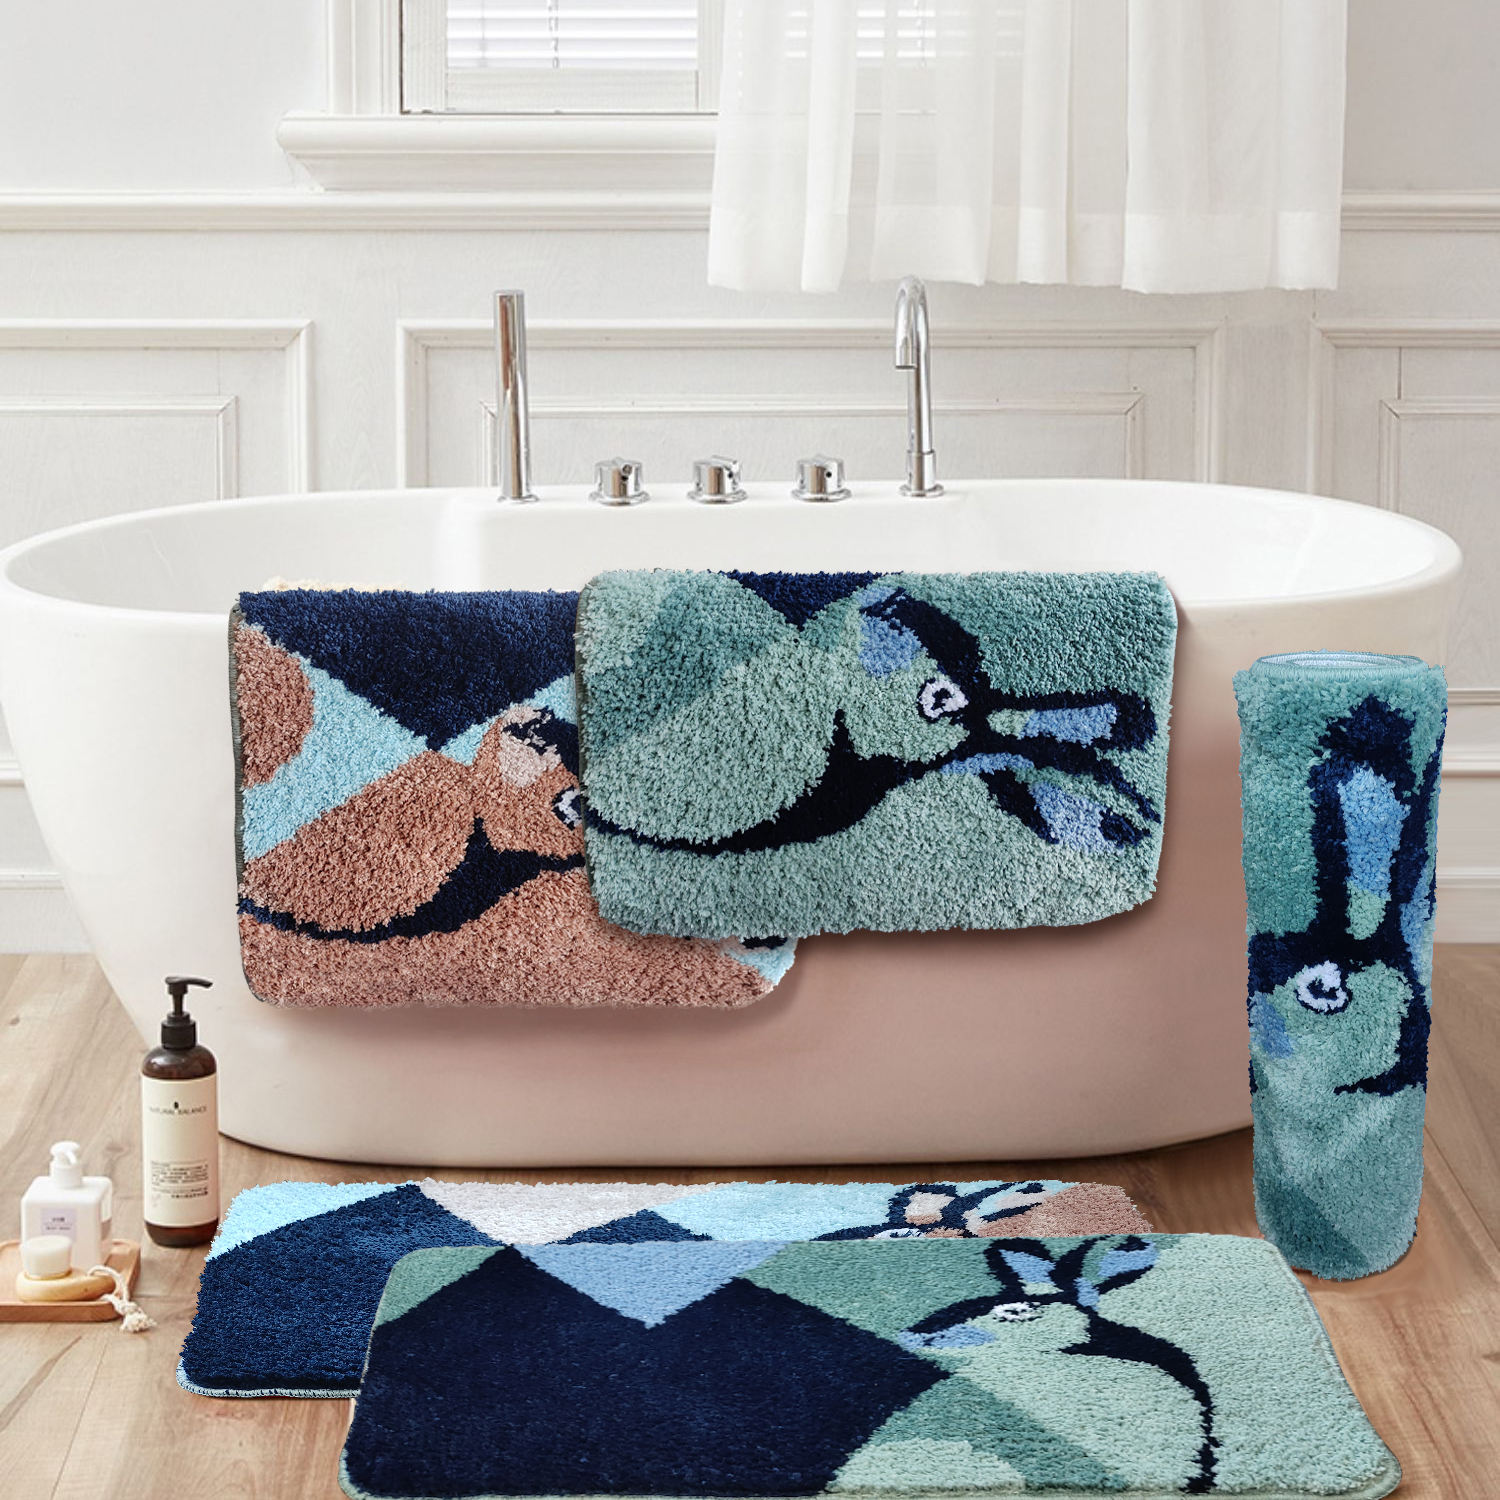 OEM Super Absorbent tufted bath mat rug Featured Image